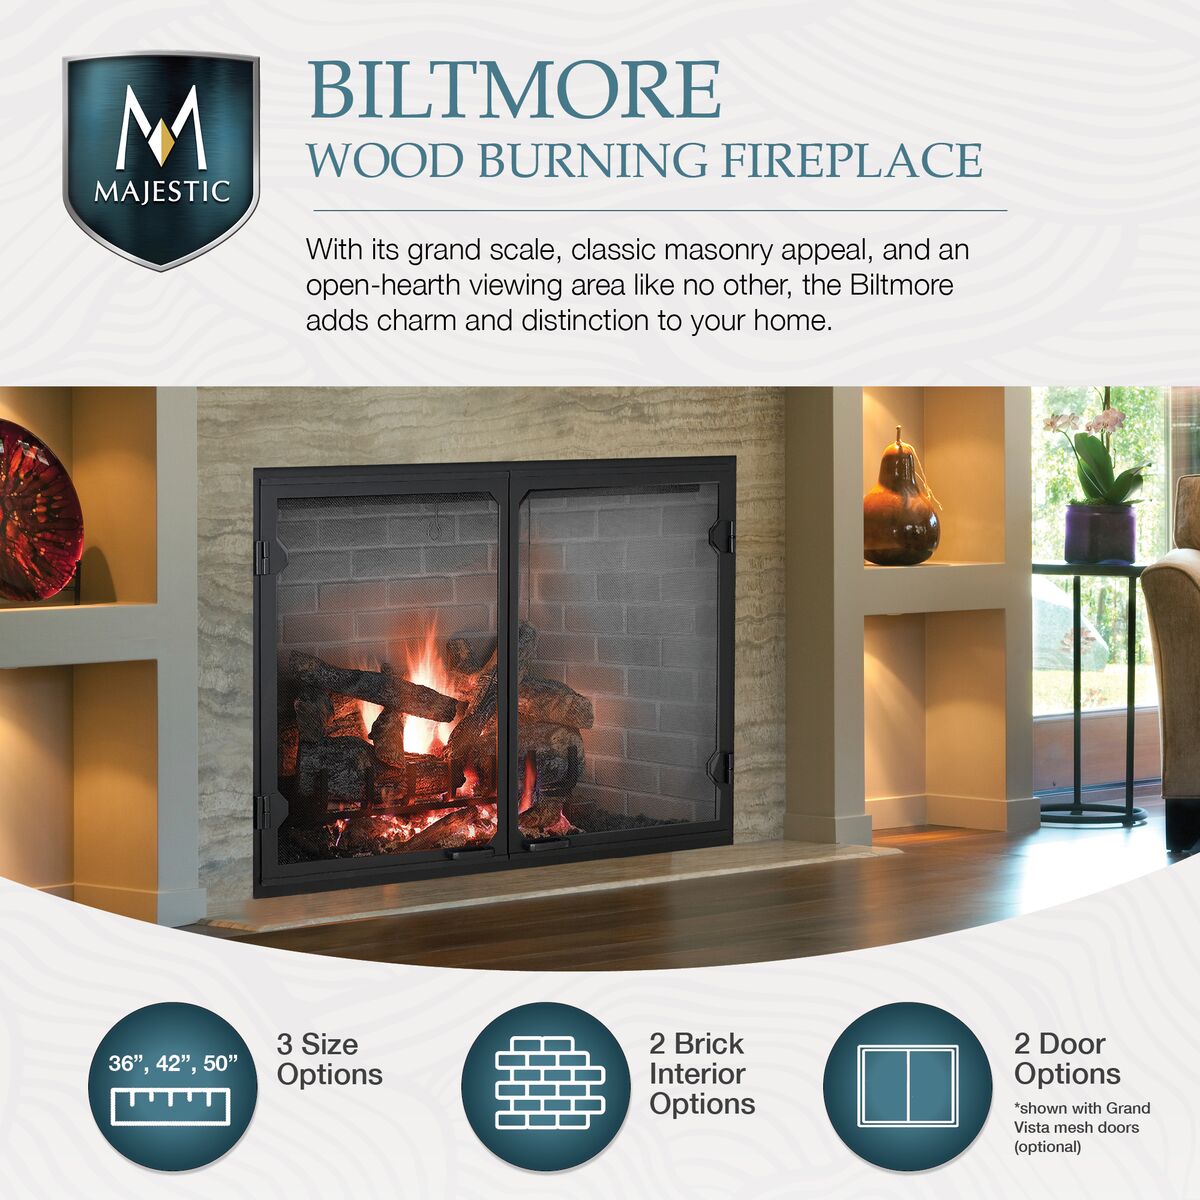 Majestic Biltmore - Wood Burning Fireplace | FireplaceTrends.com